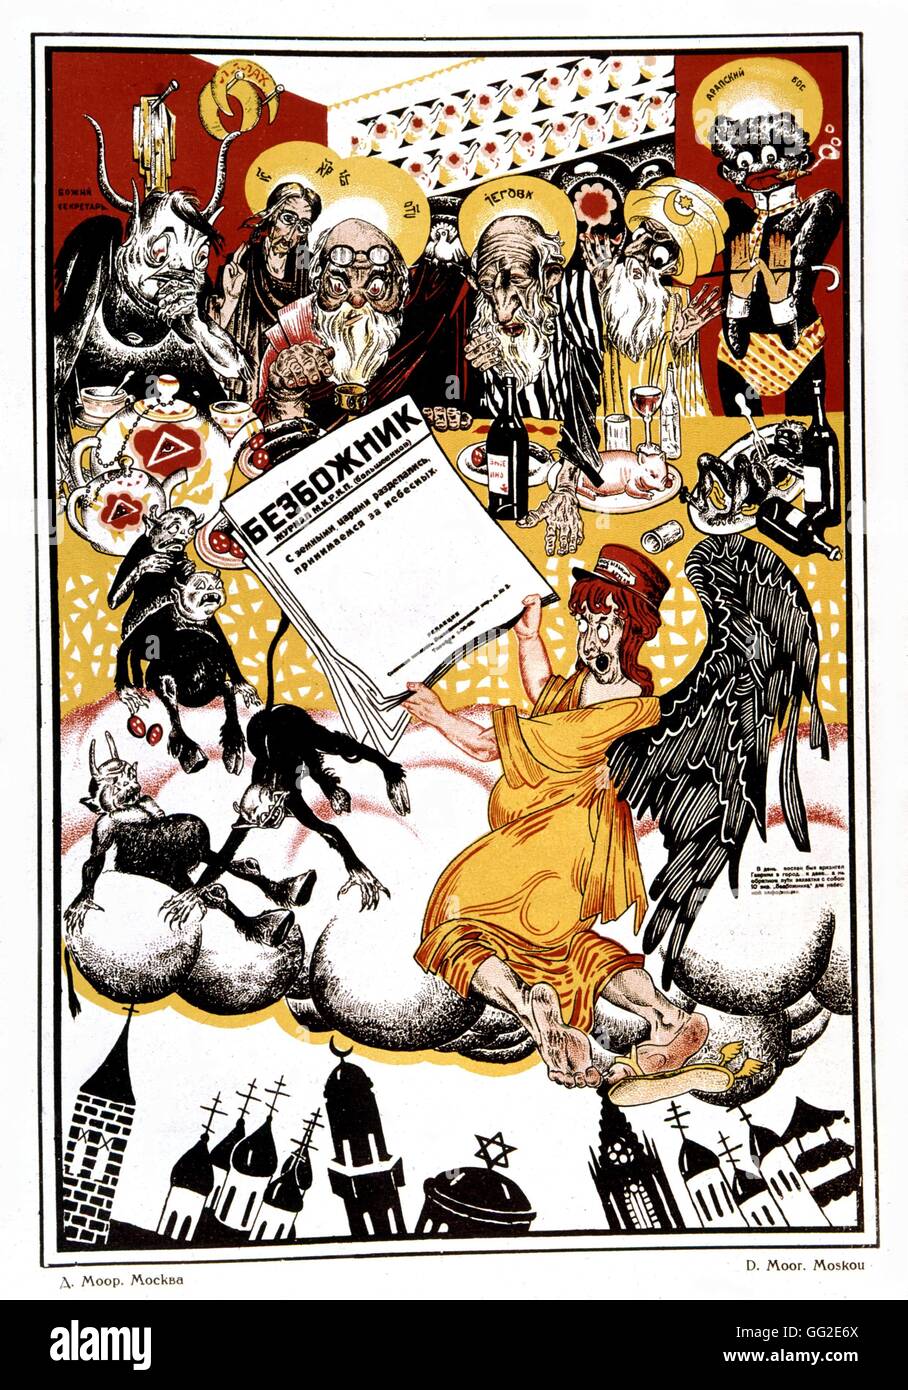 D. Moor Soviet propaganda poster Campaign against religion 1918-1923 U.S.S.R. Stock Photo